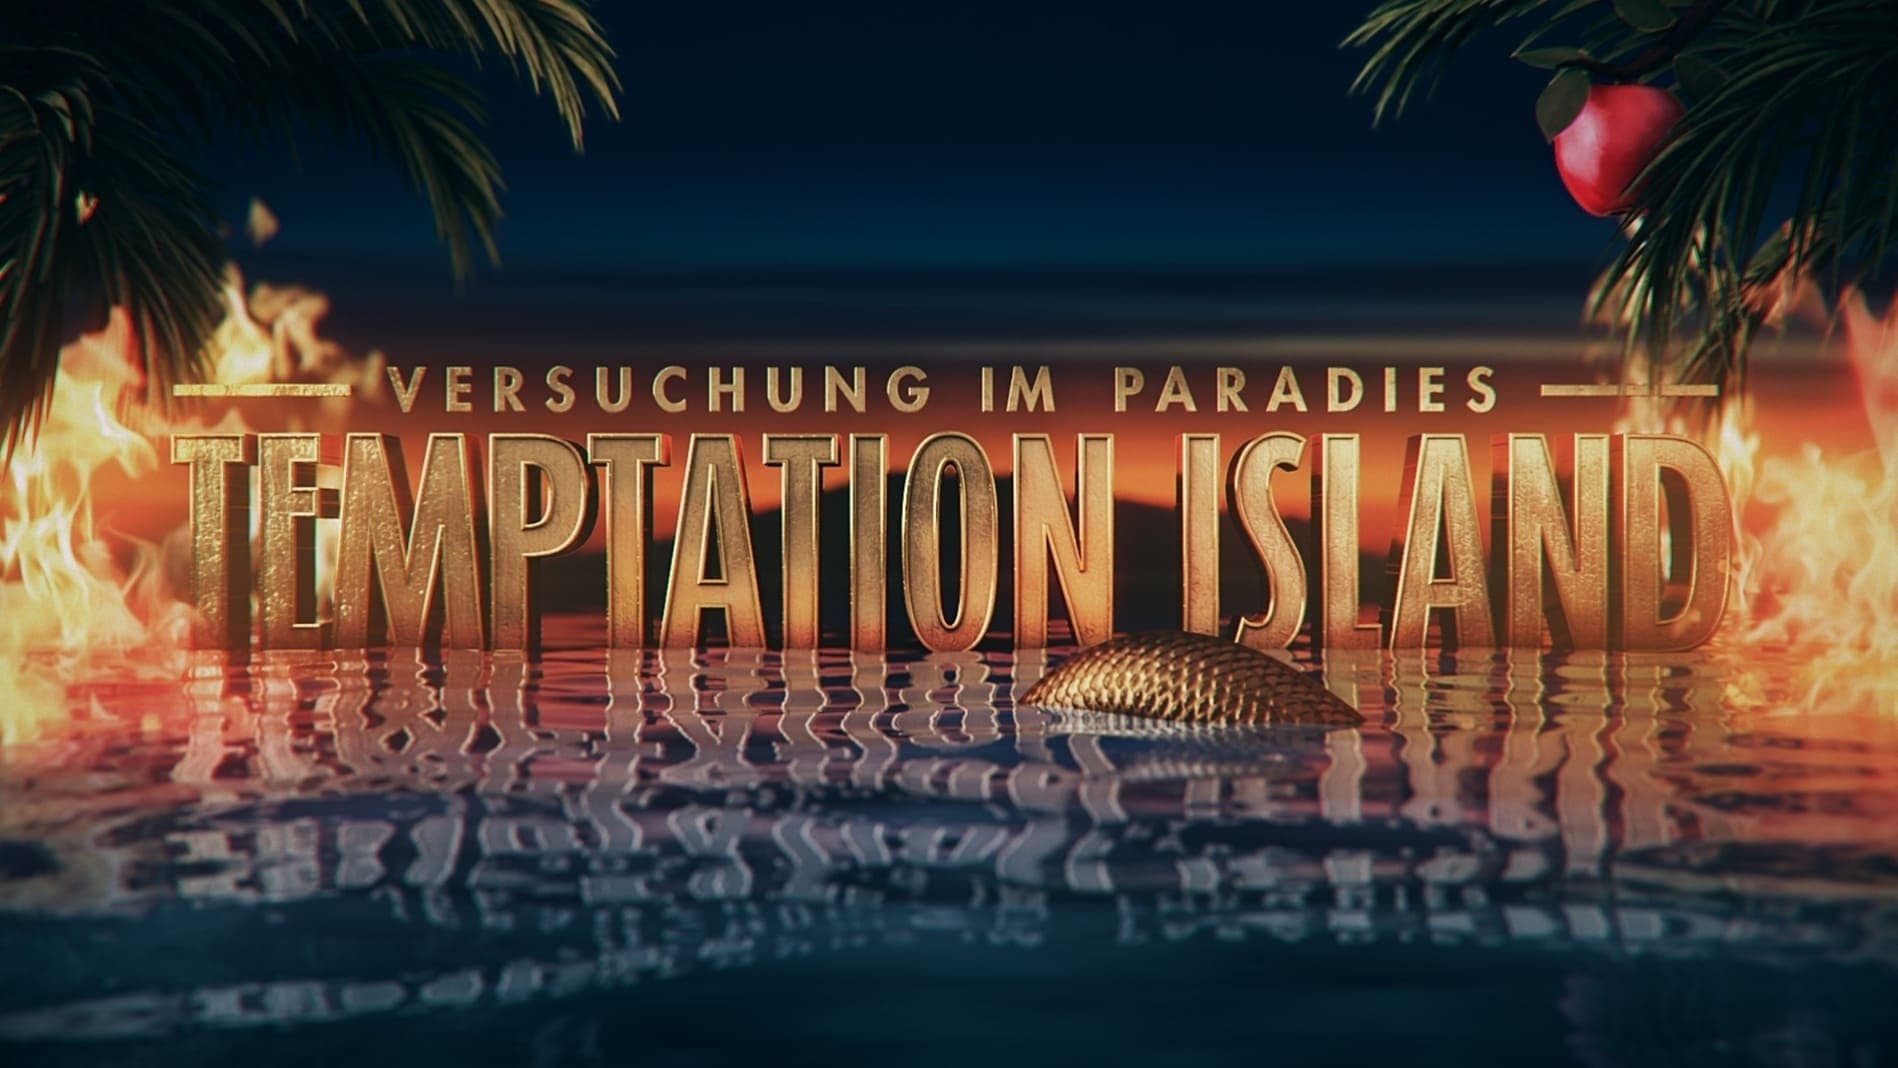 Temptation Island - Versuchung im Paradies (1970)